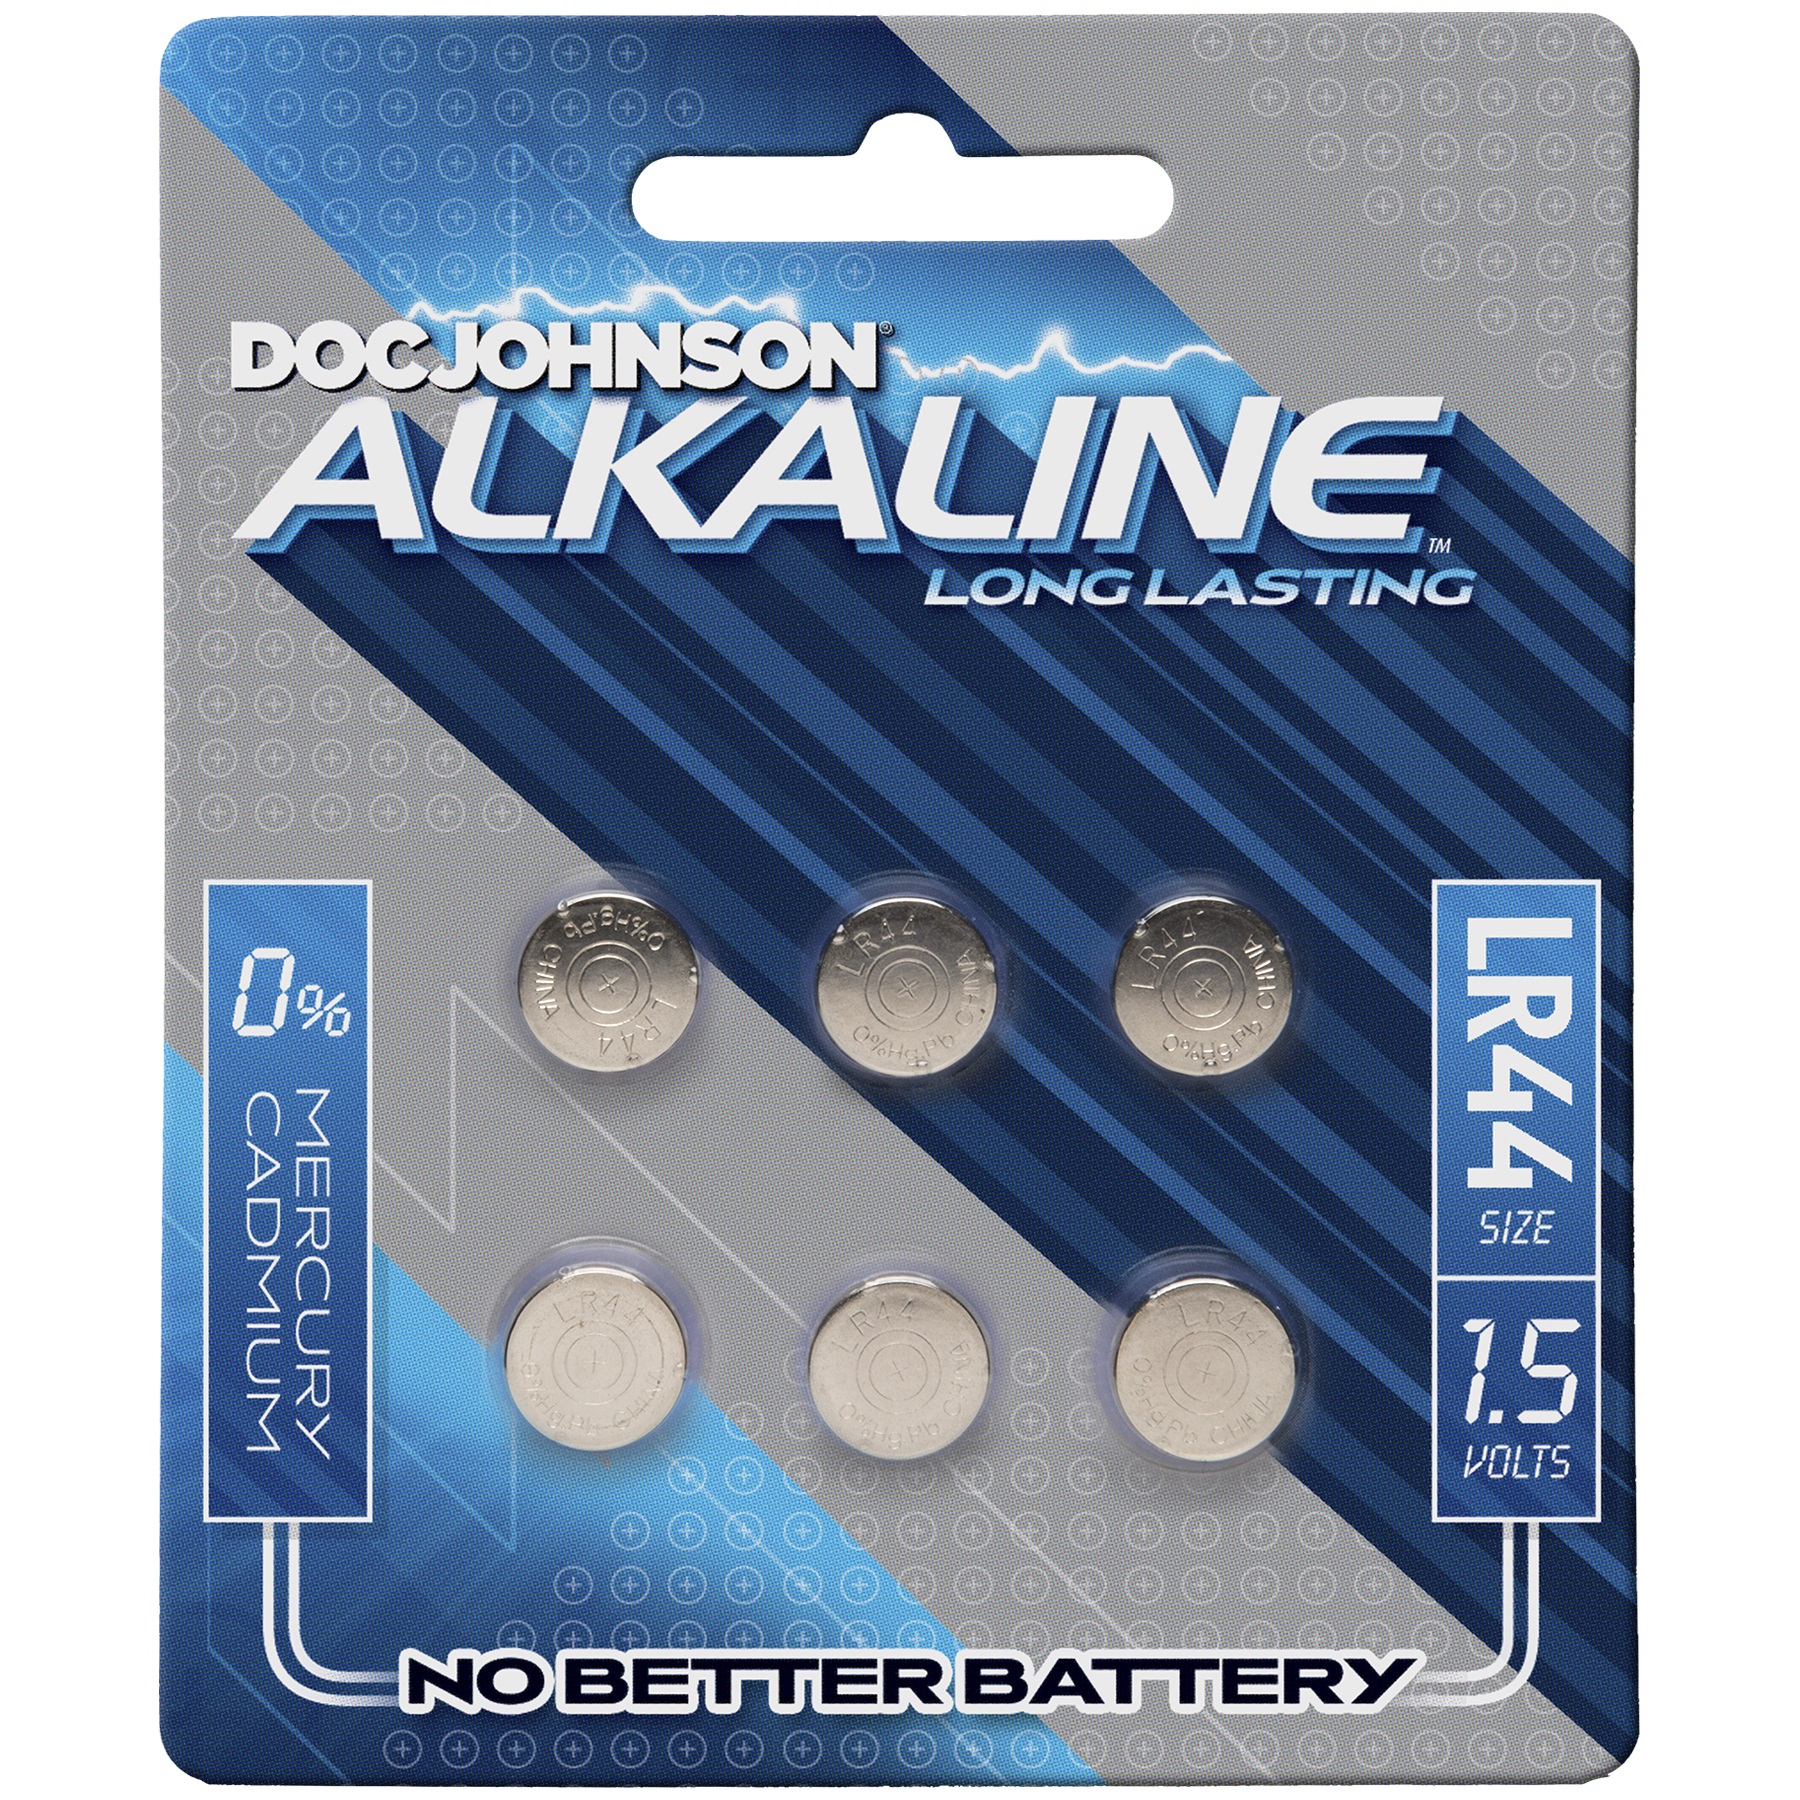 Doc Johnson Alkaline Batteries - LR44 - 15 Volts